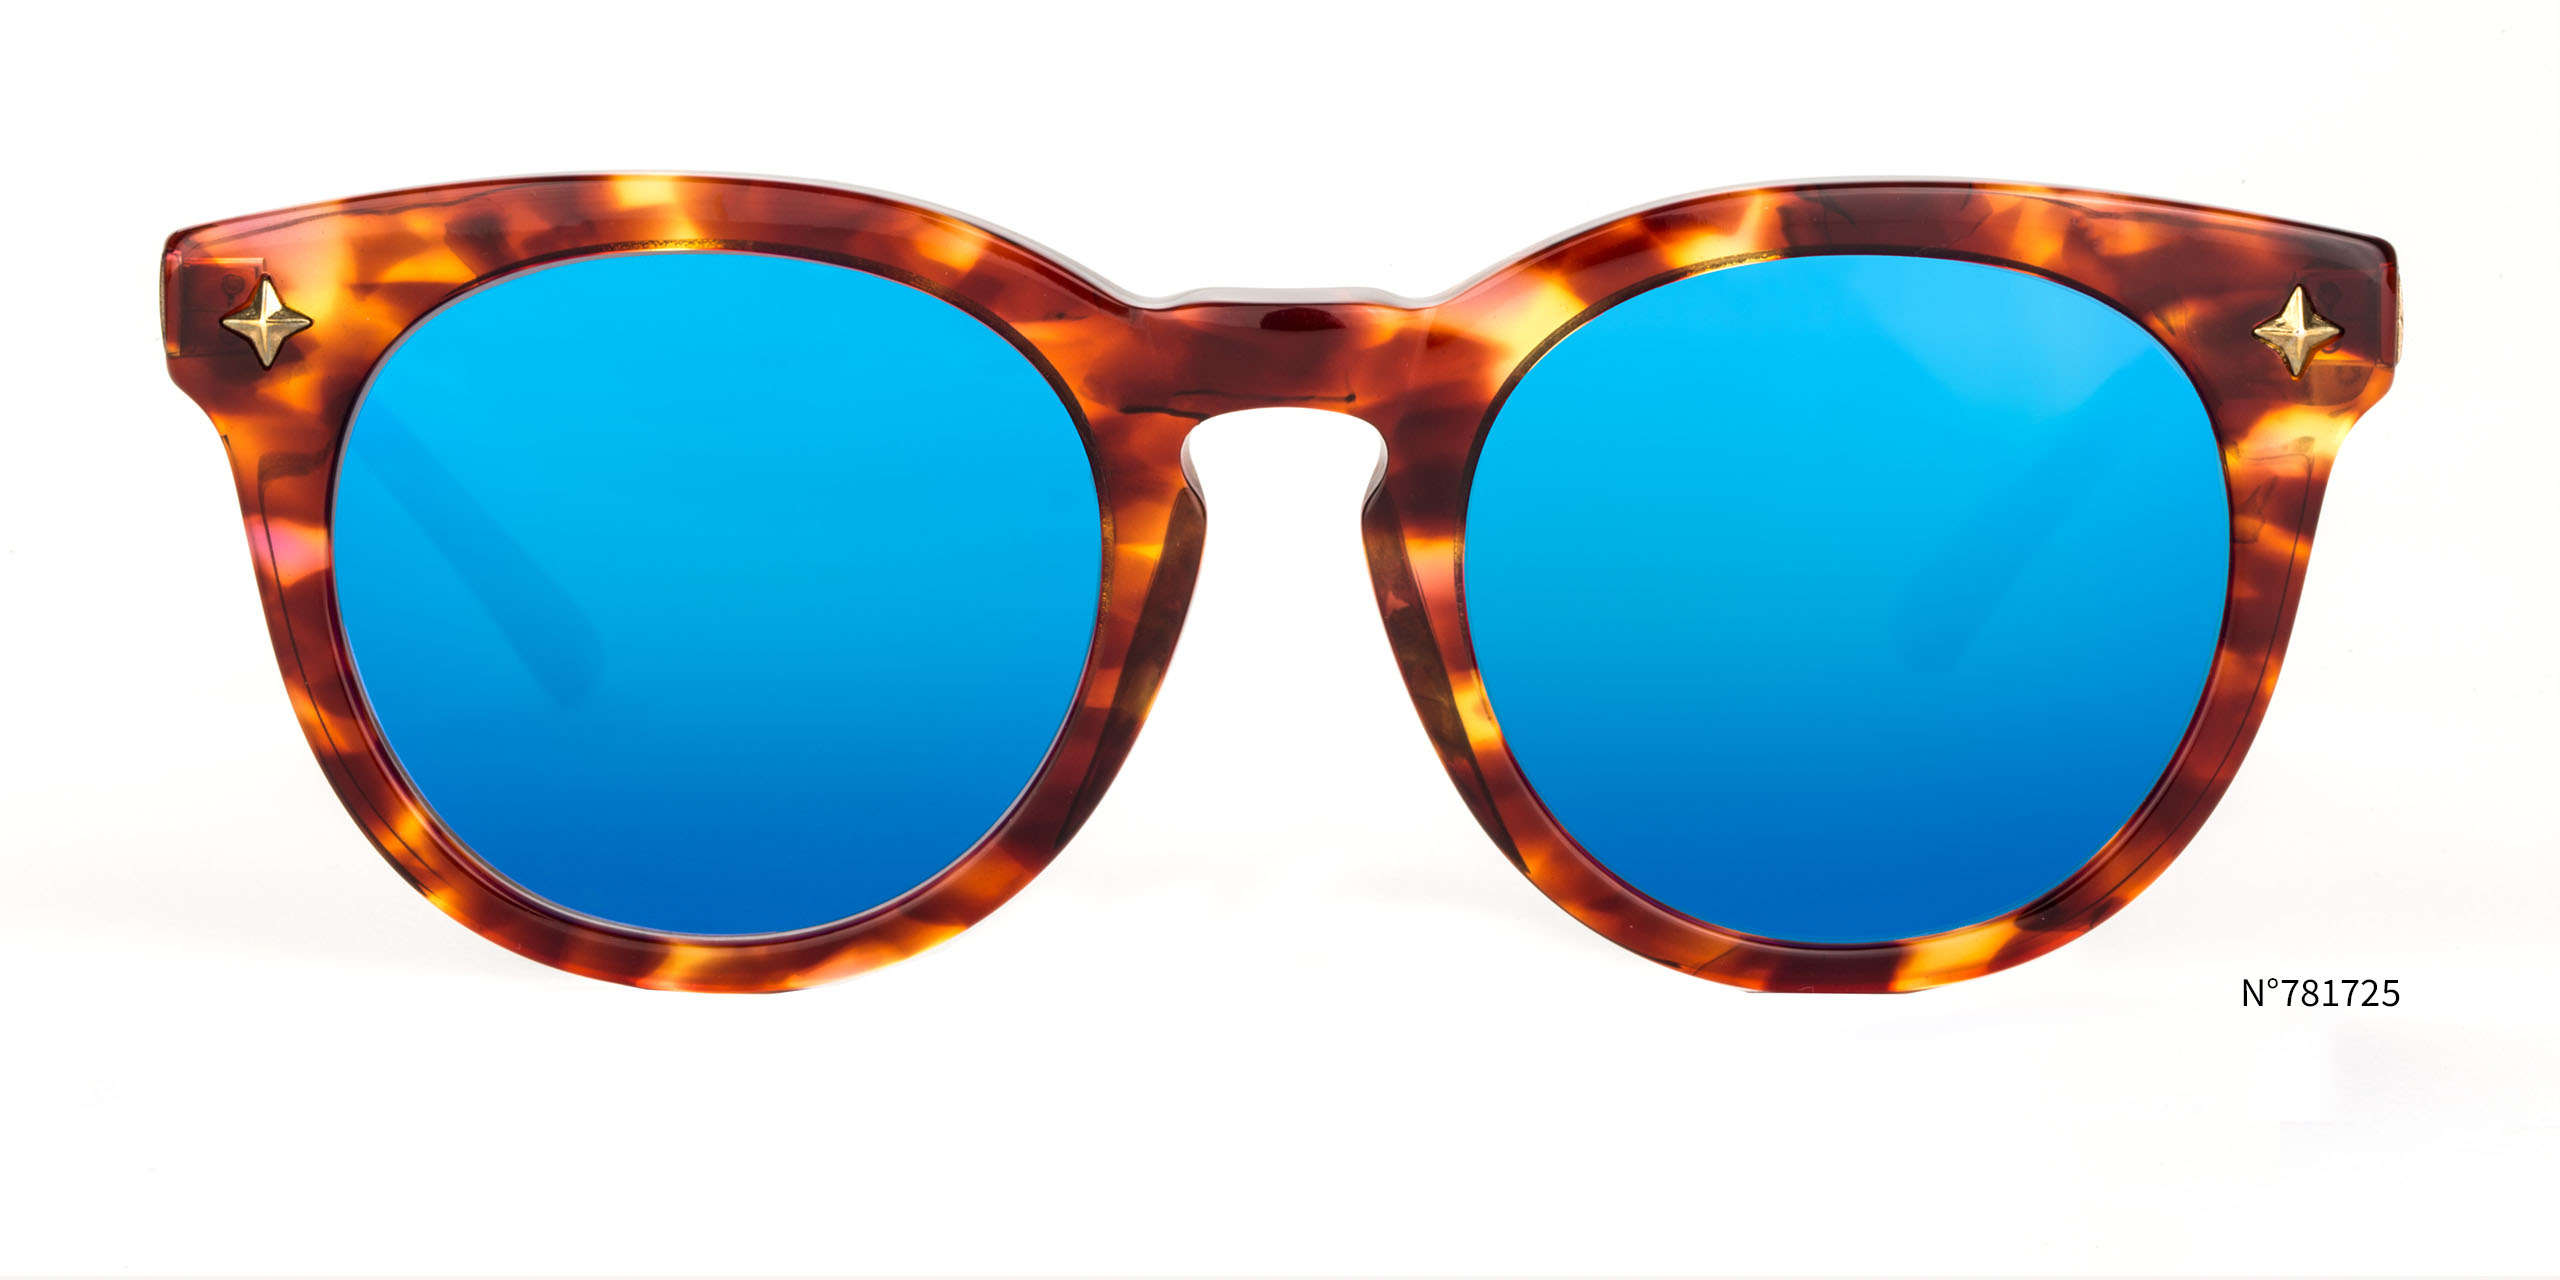 gray-blue-round-sunglasses-781725